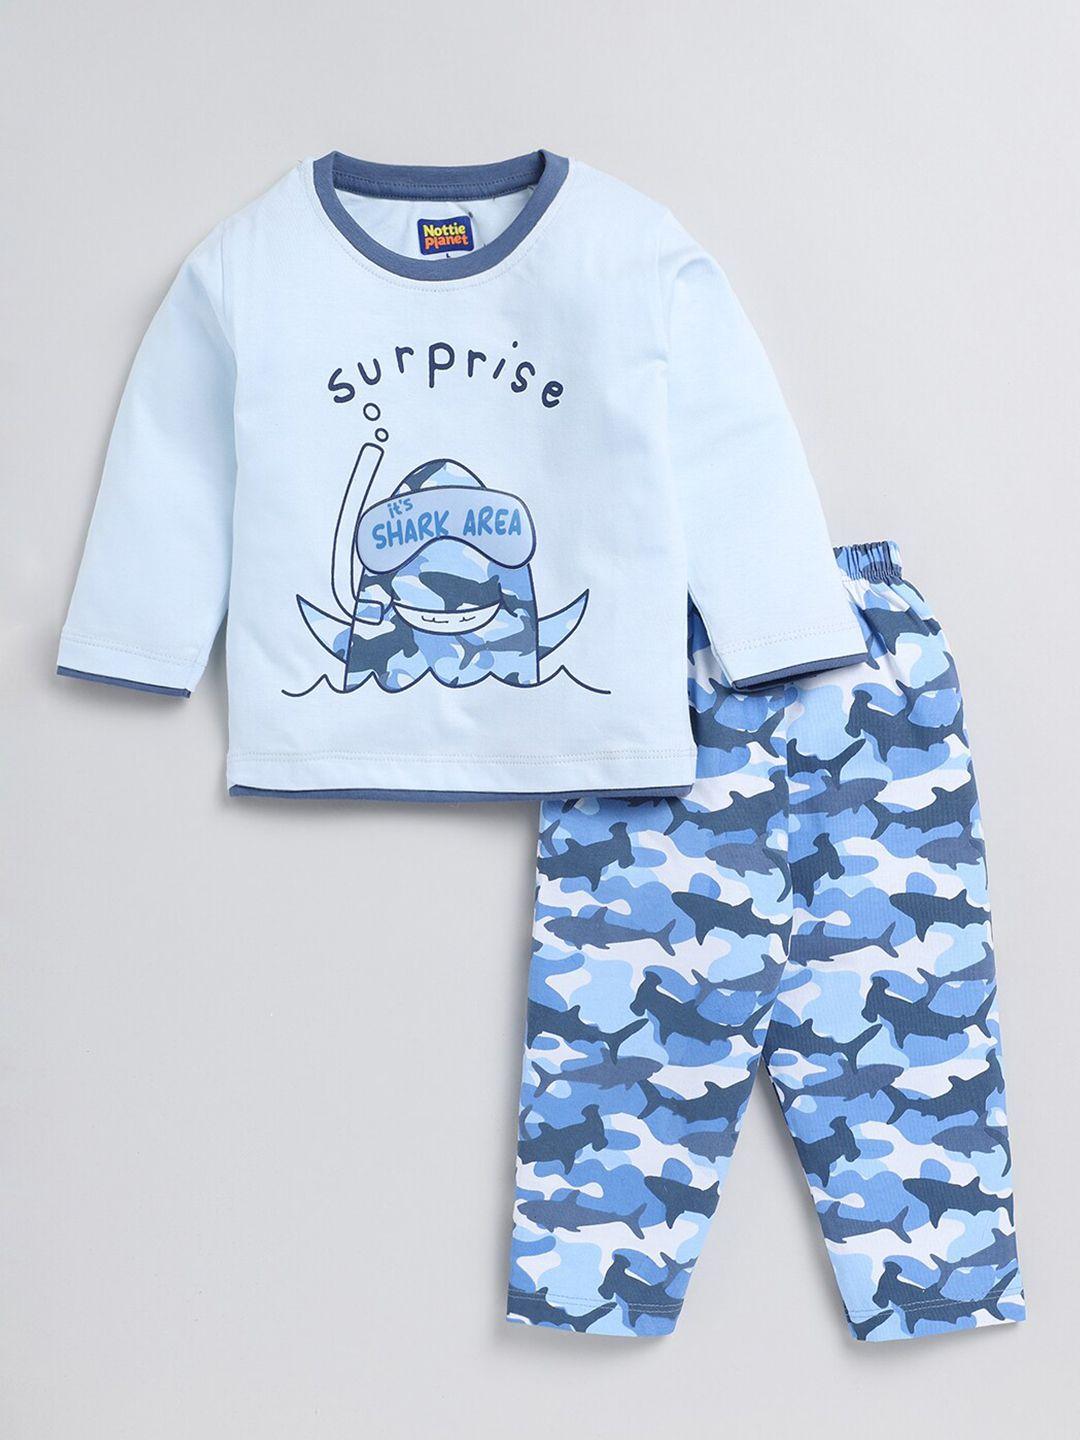 nottie planet boys printed pure cotton t-shirt with pyjamas